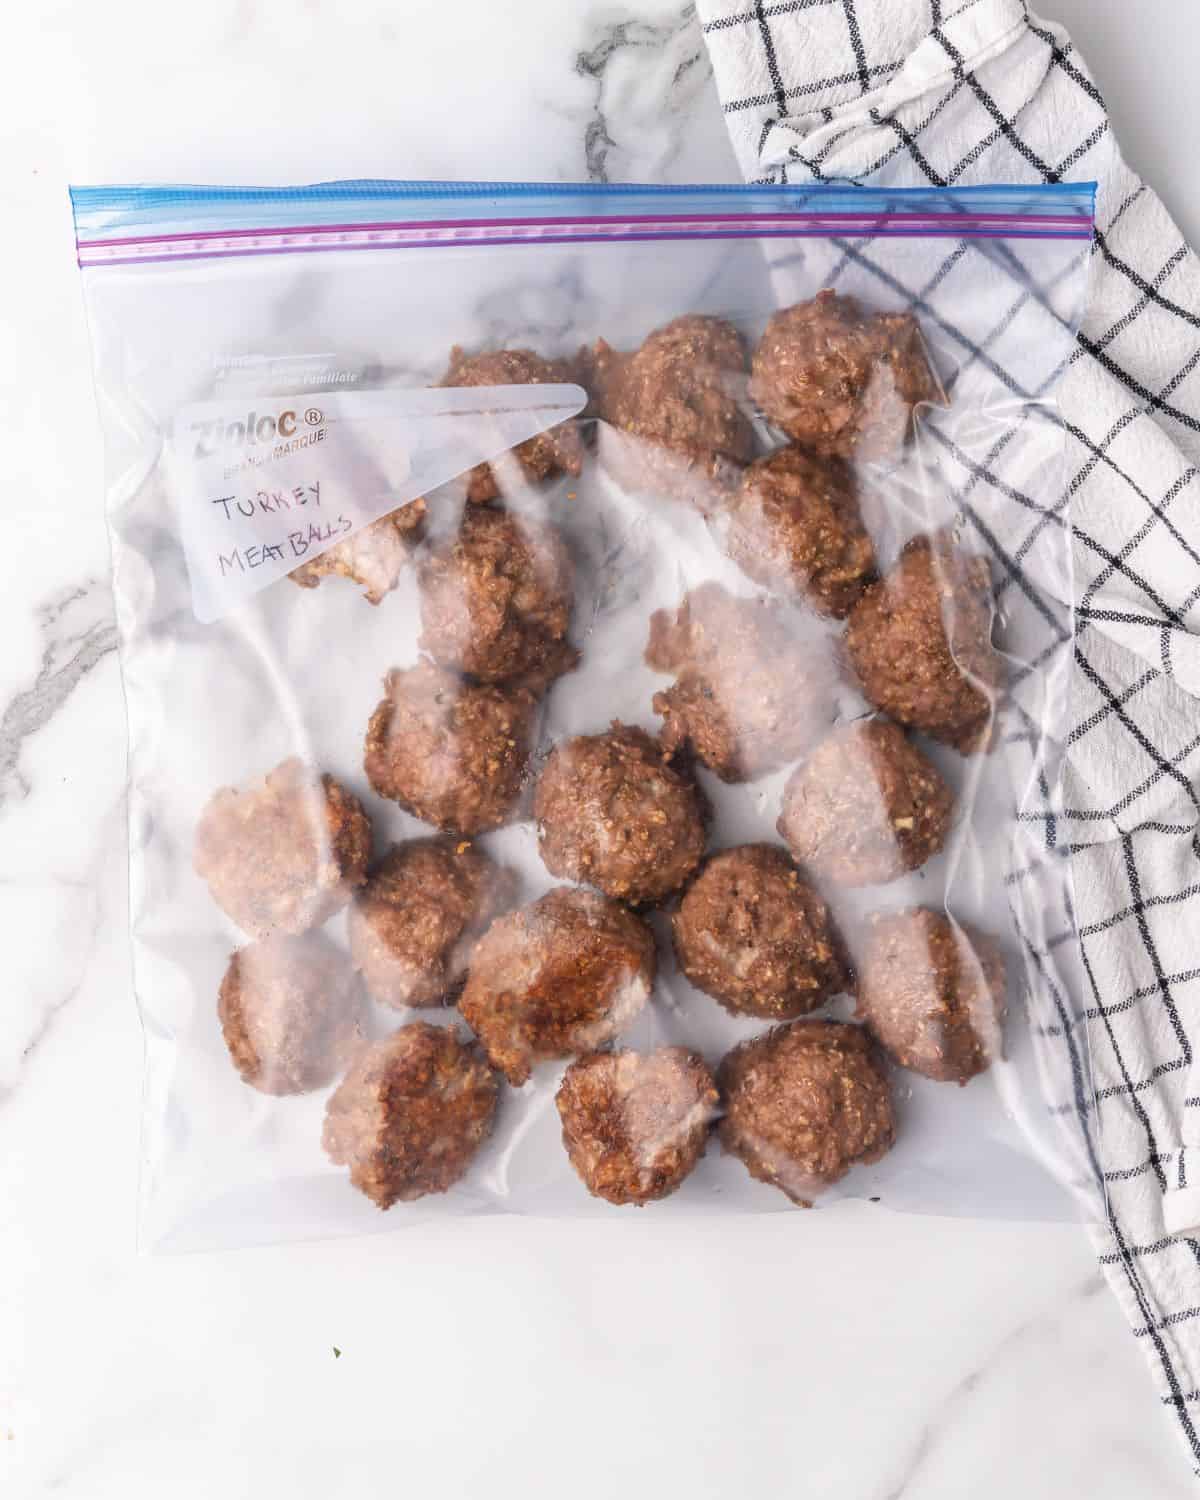 meatballs in a freezer bag.